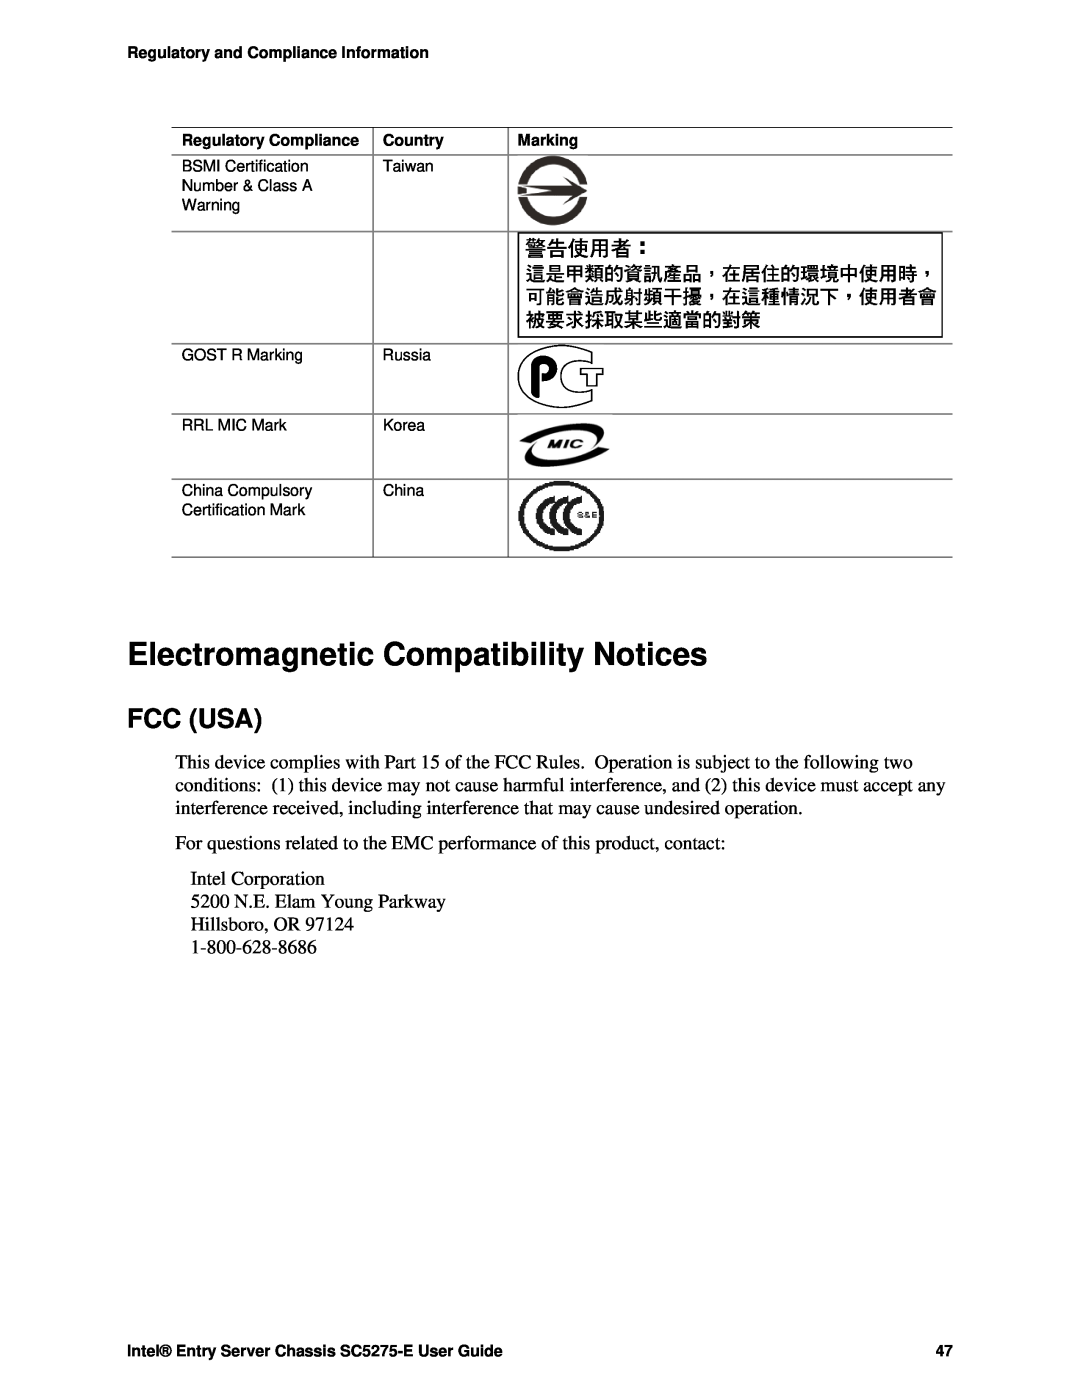 Intel C50277-001, SC5275-E manual Electromagnetic Compatibility Notices, Fcc Usa 